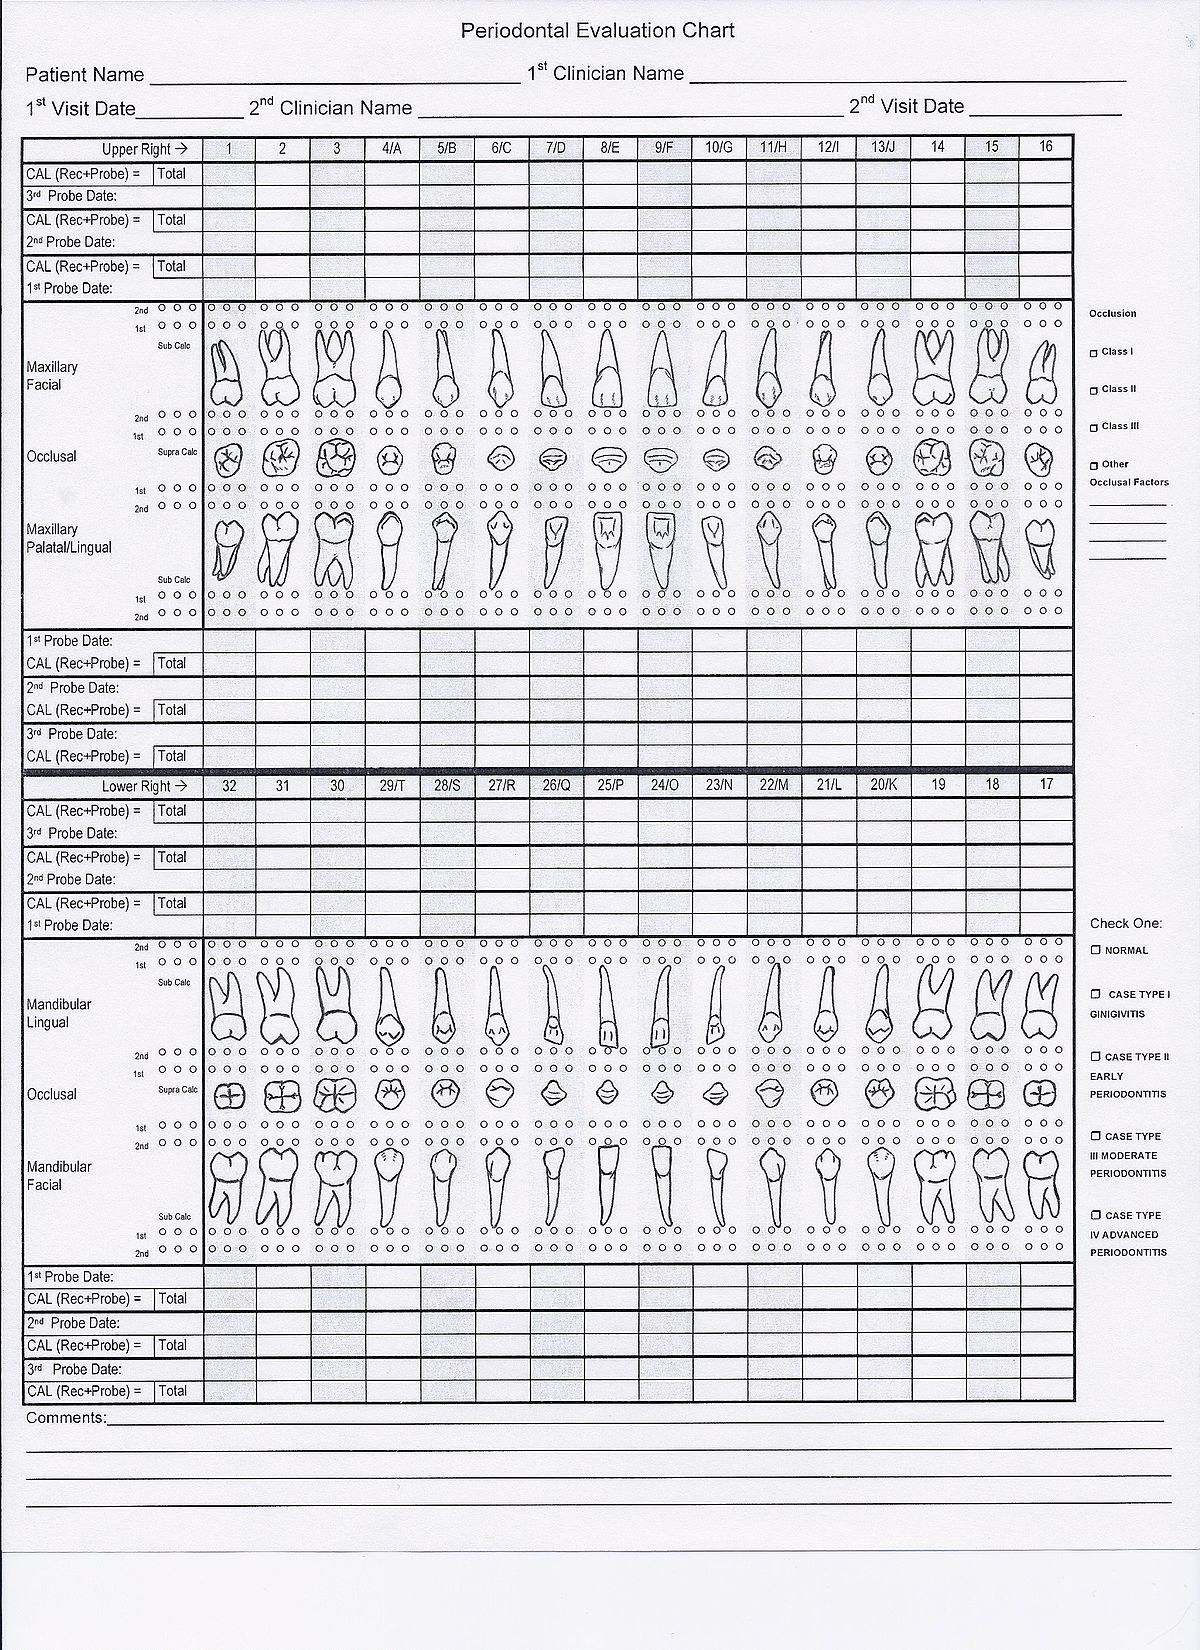 Periodontal Chart Download